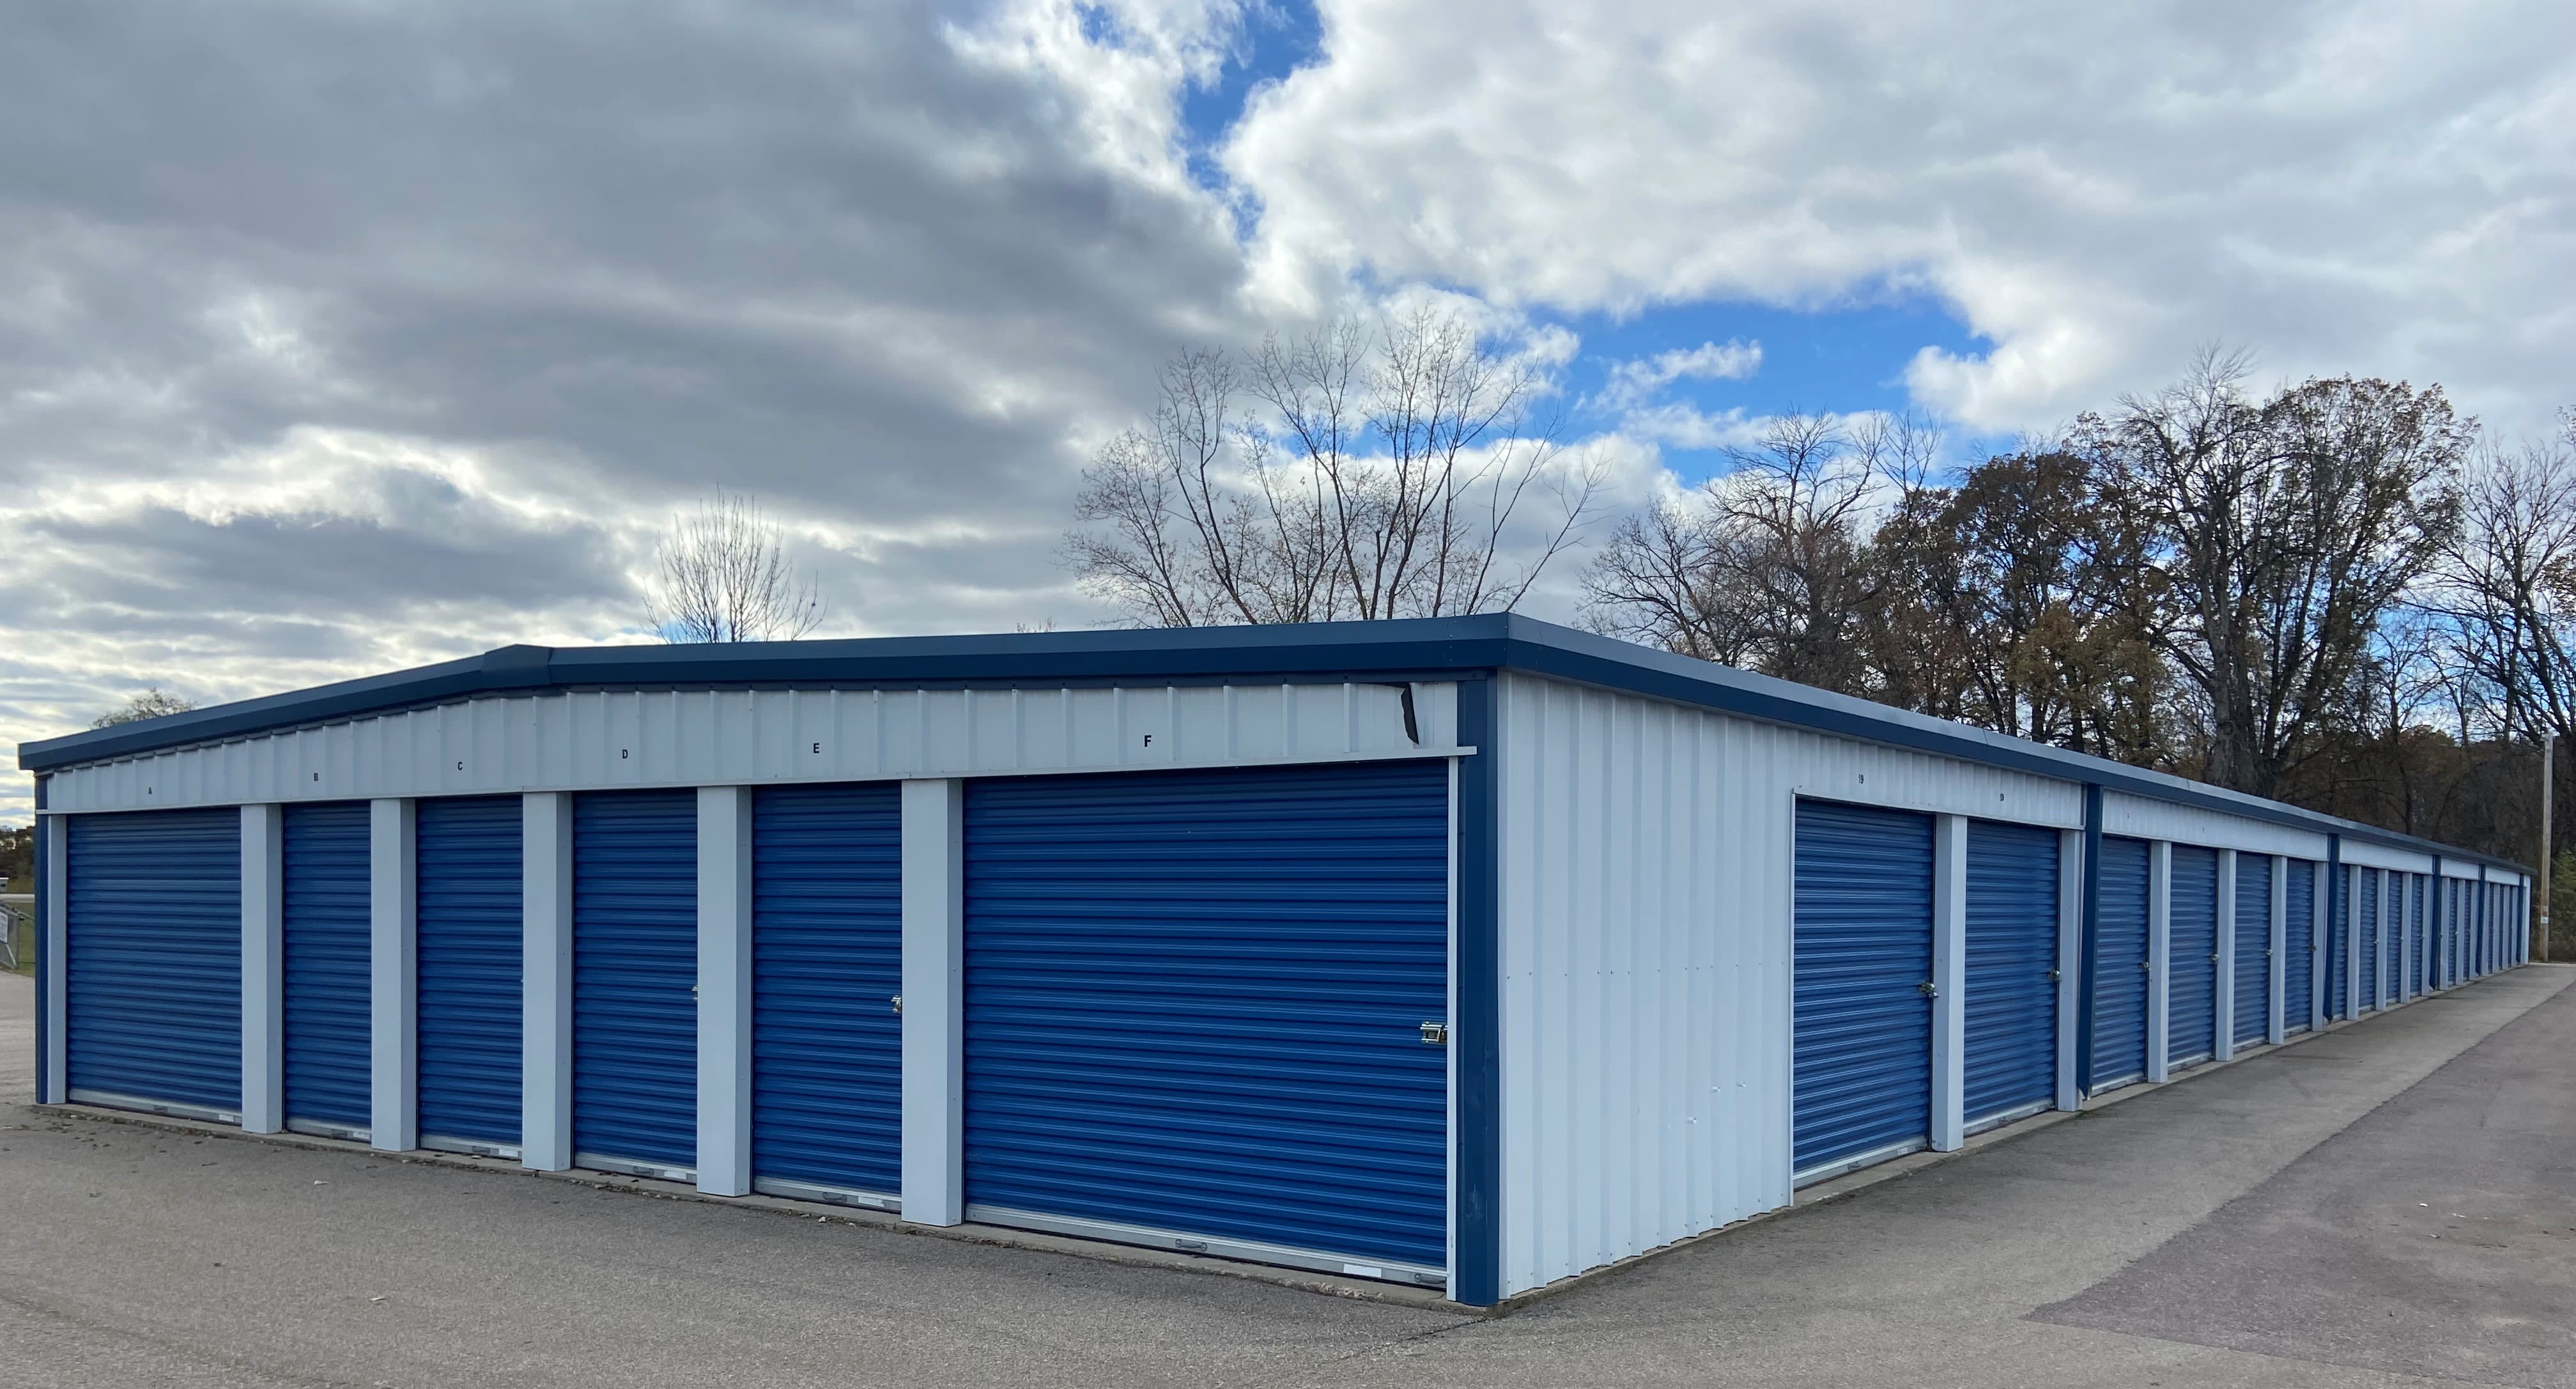 Storage units with blue doors at KO Storage of Wisconsin Dells Hwy 16 in Wisconsin Dells, Wisconsin